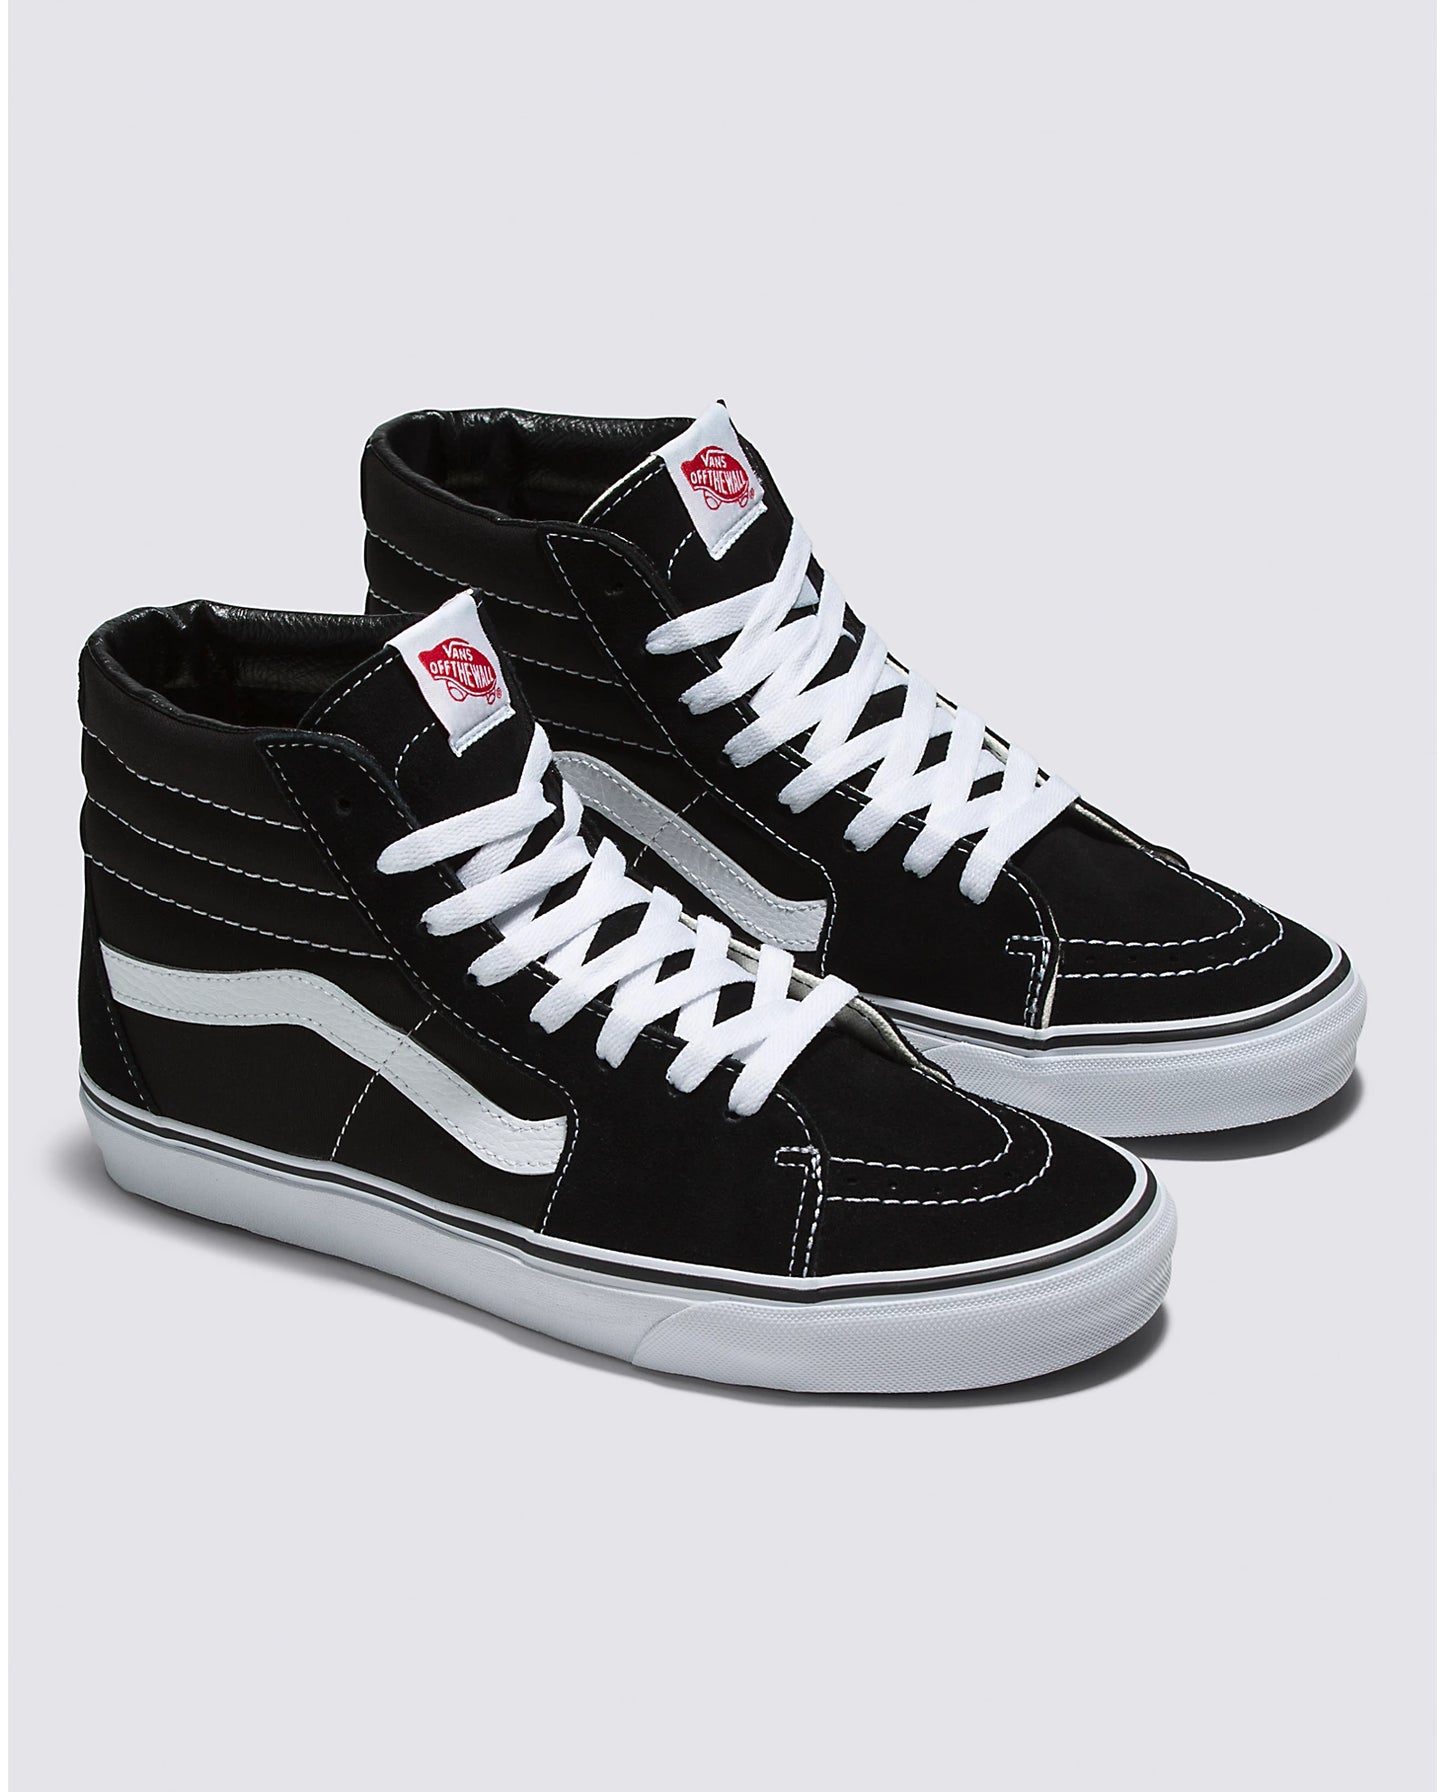 Vans Women's Sk8-Hi Sneakers - Black/Black/White